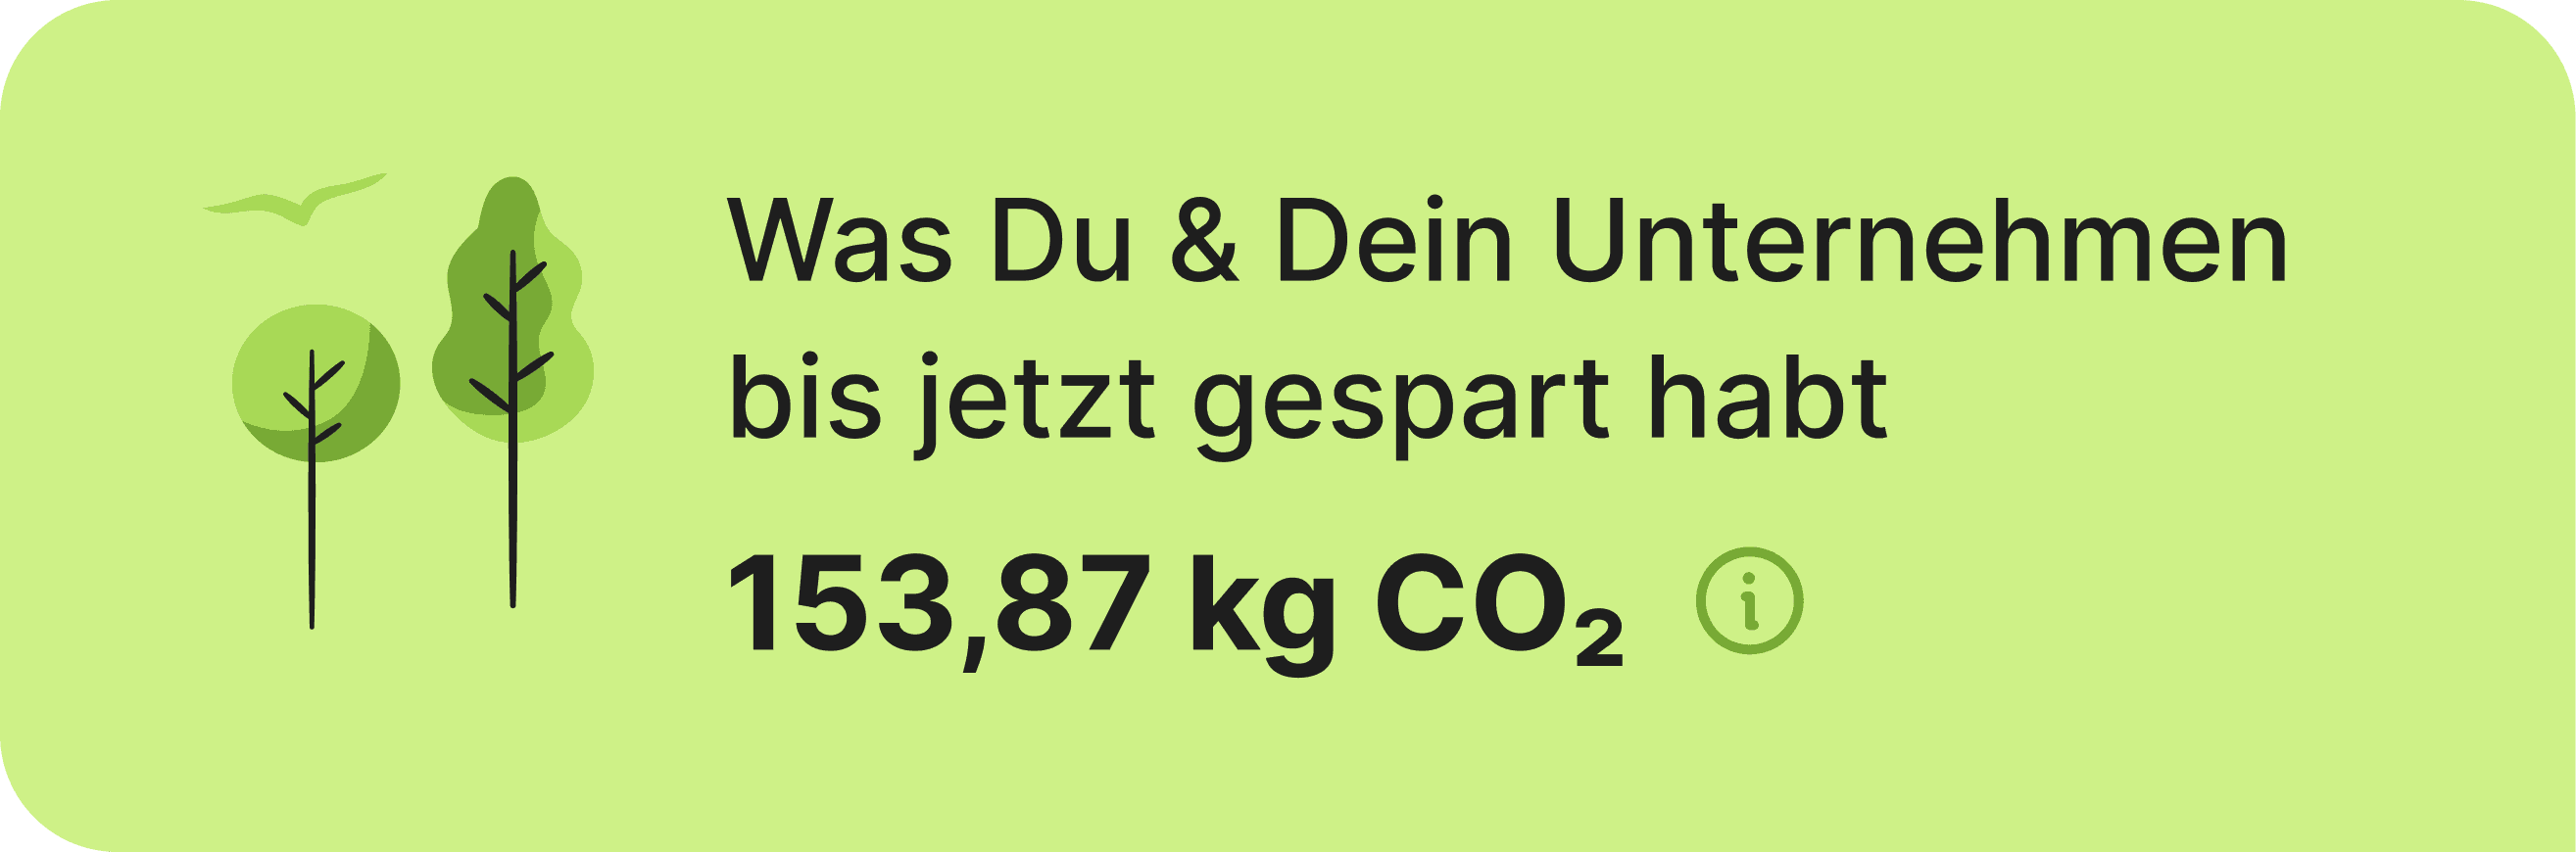 CO₂ Savings